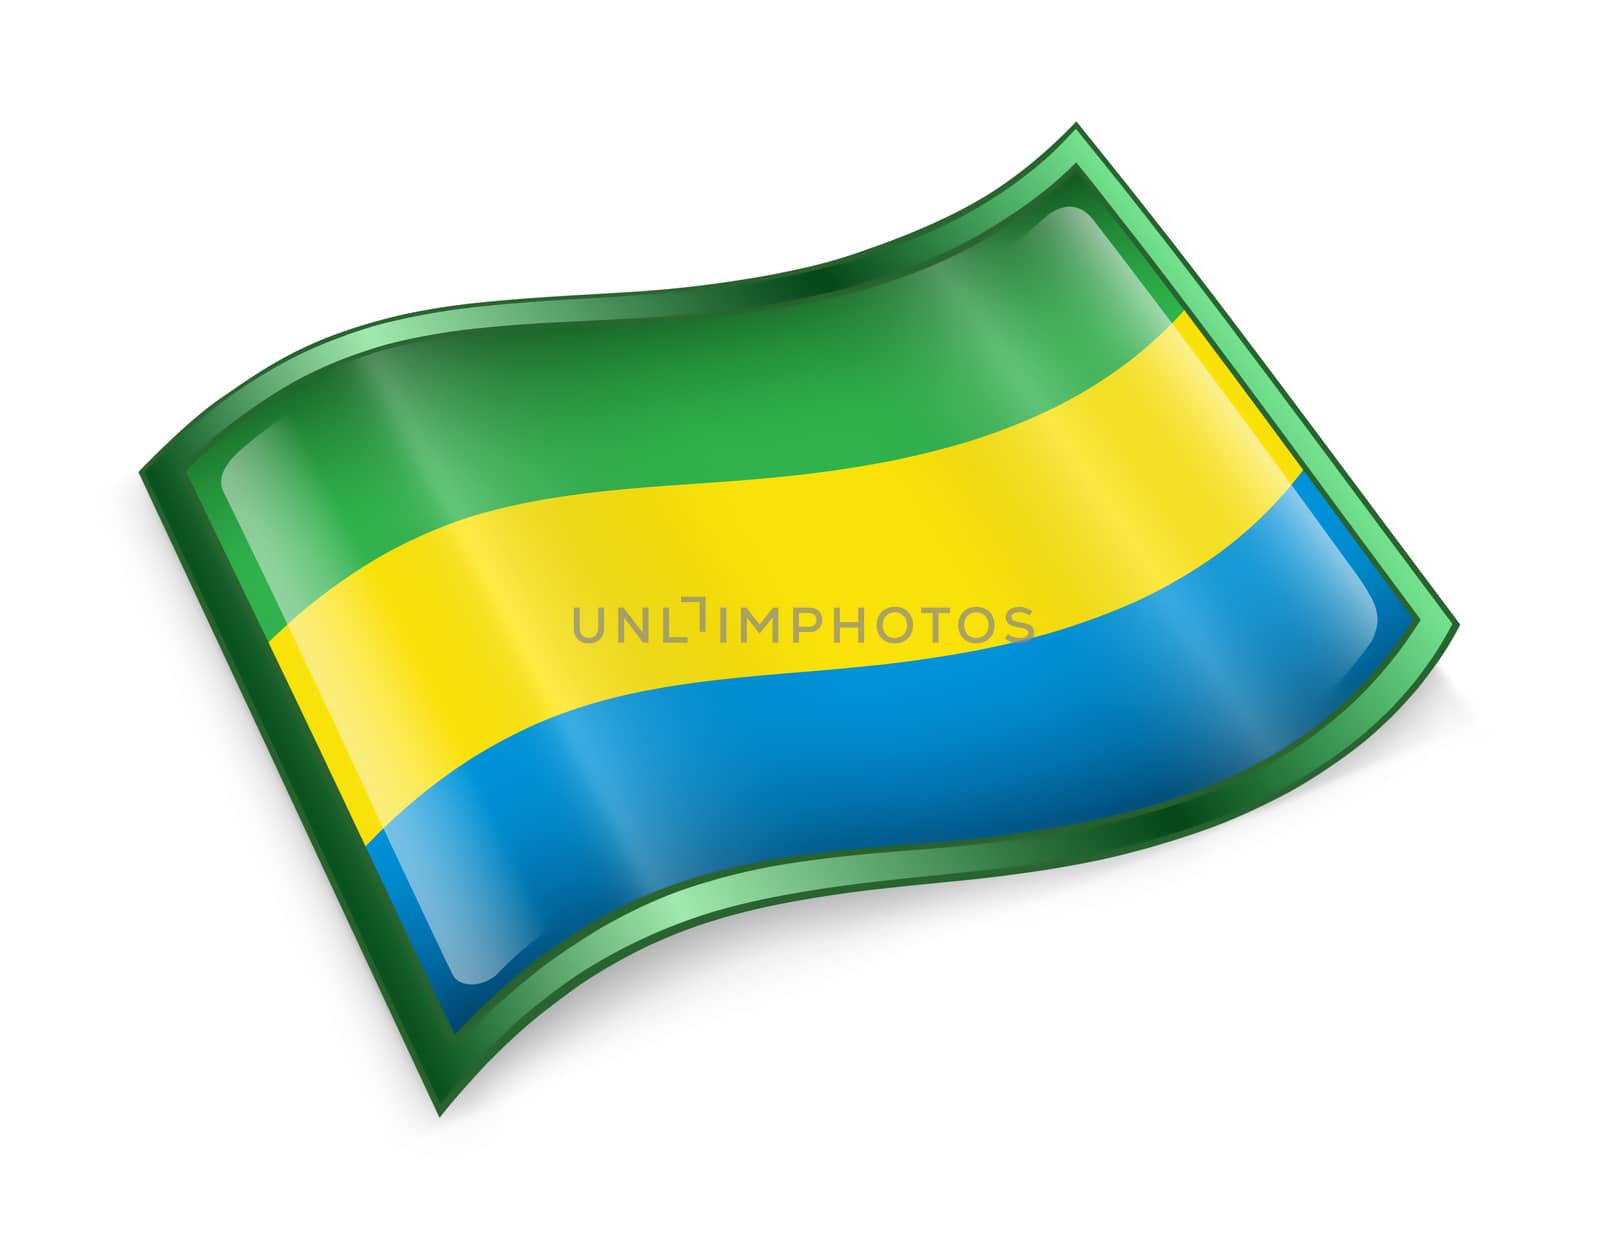 Gabon Flag icon, isolated on white background.